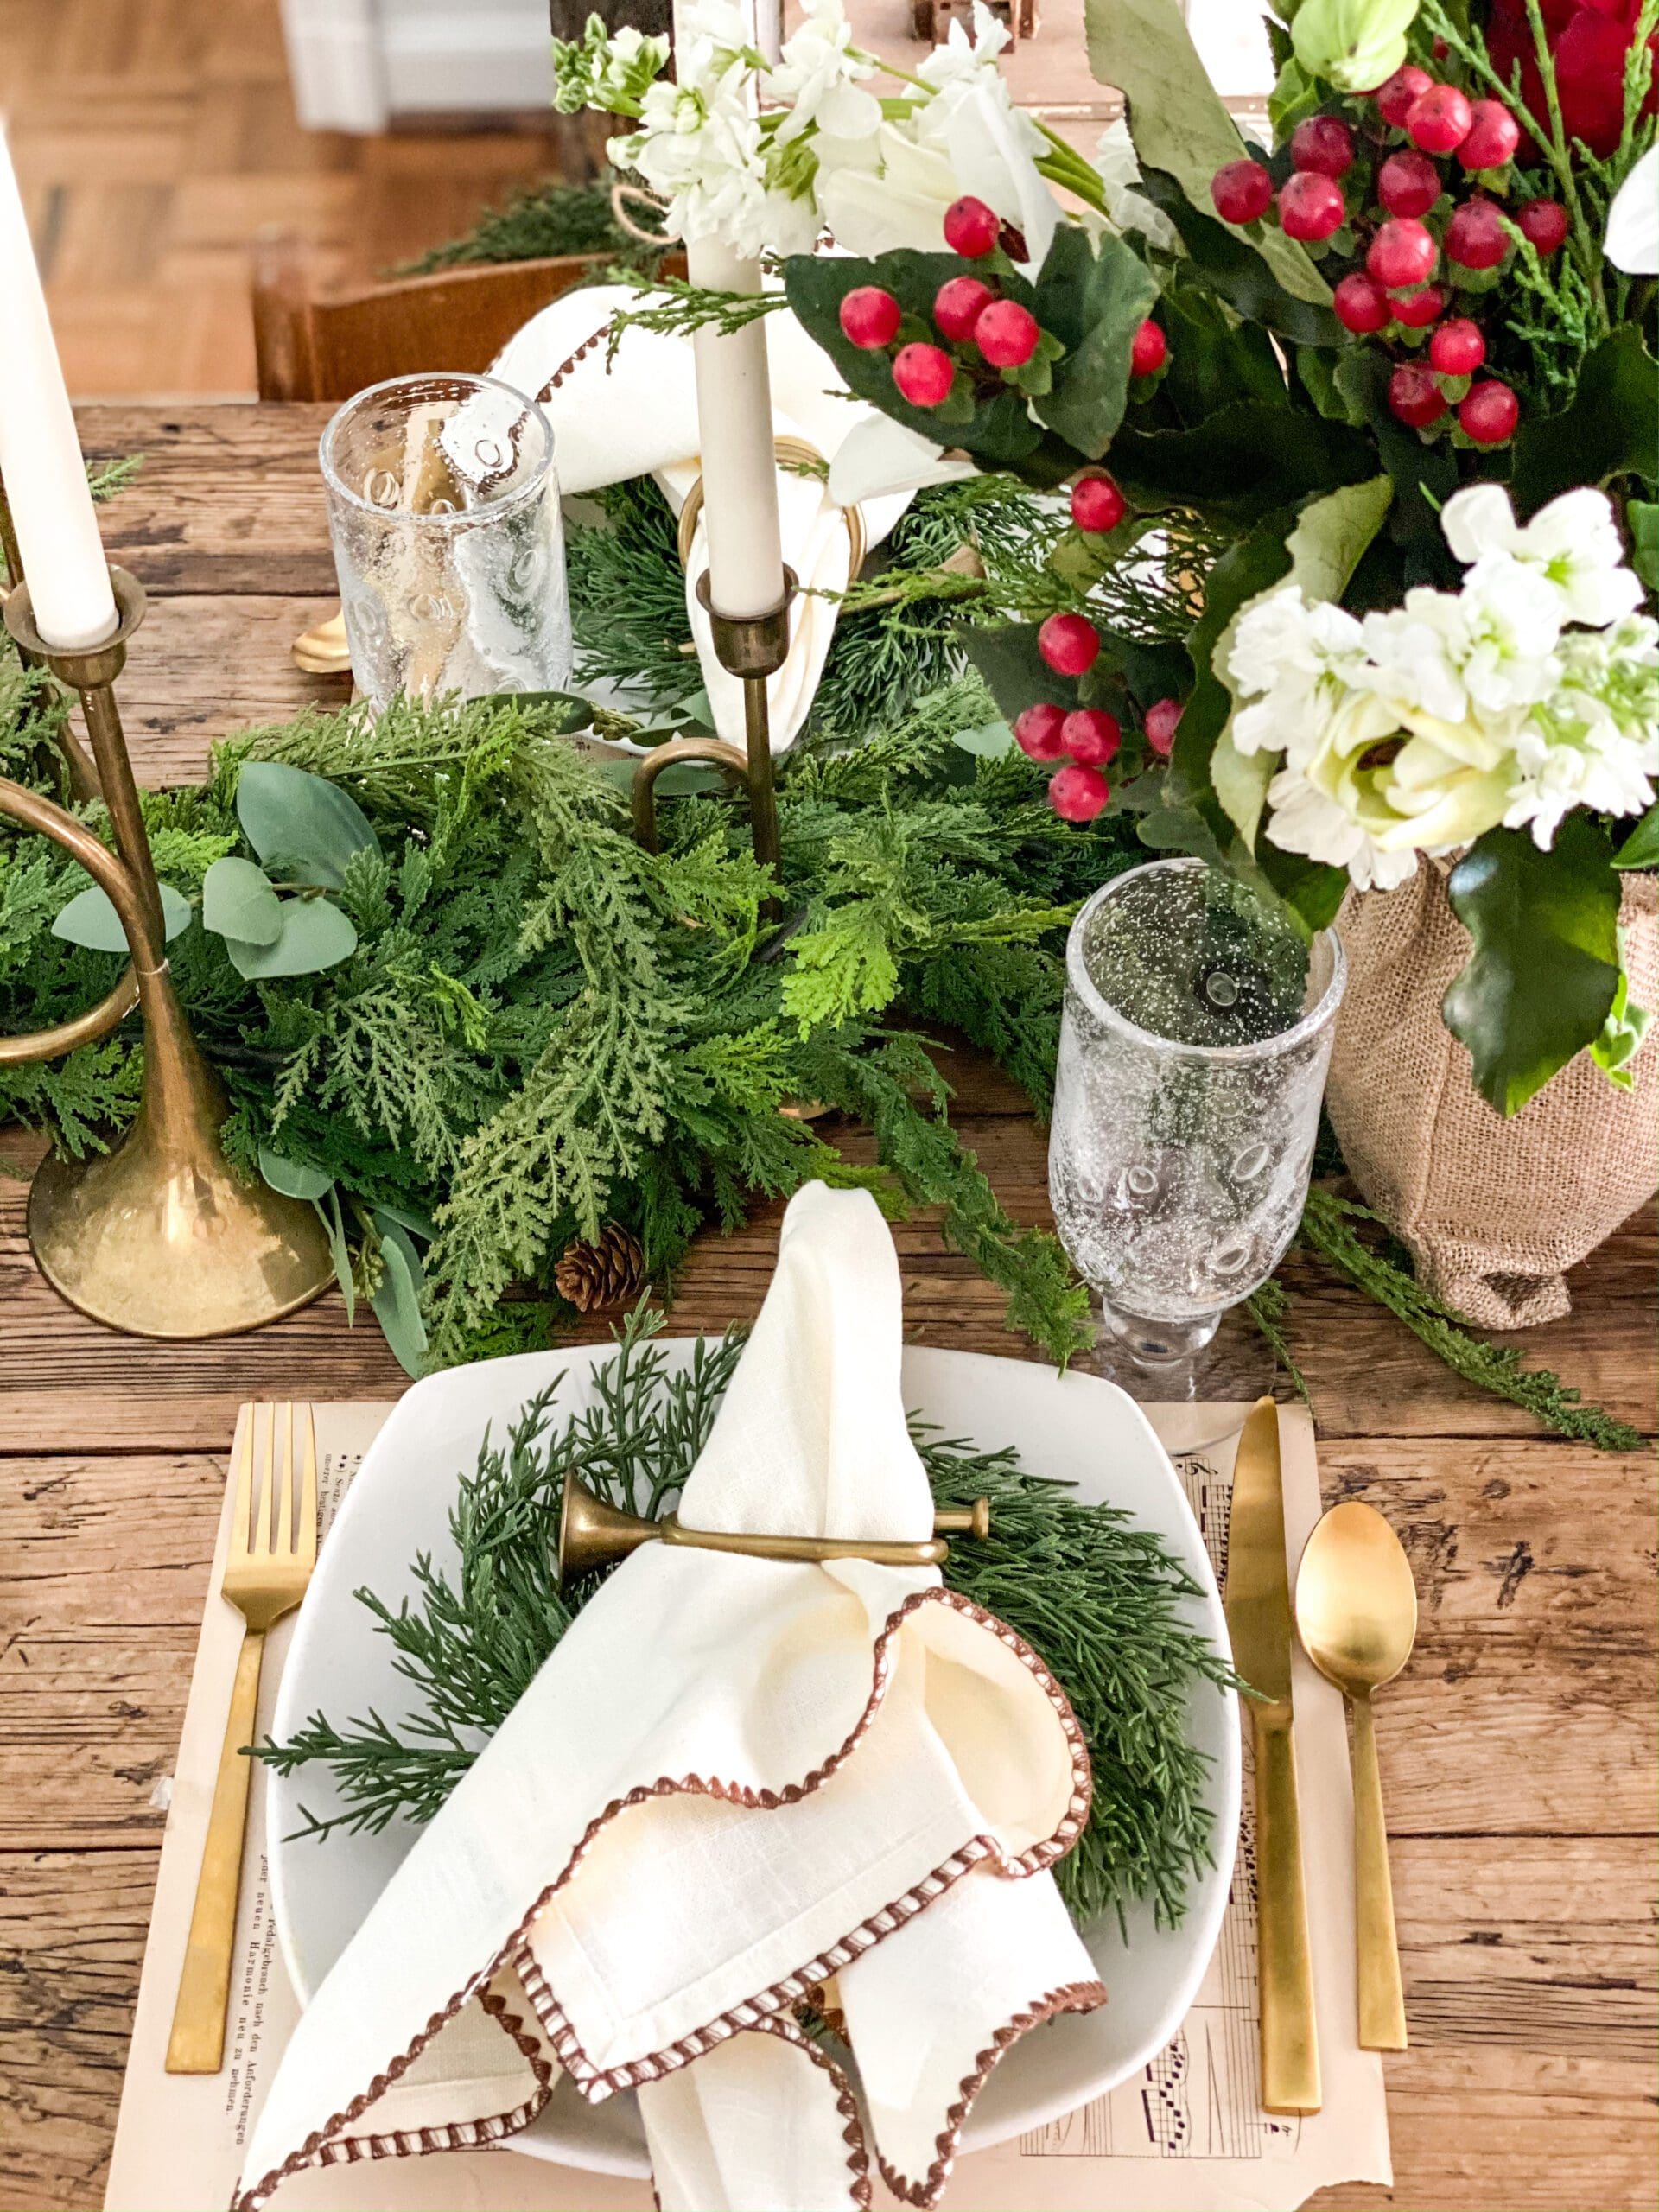 6 Beautiful Christmas Table Ideas You’ll Love This Season